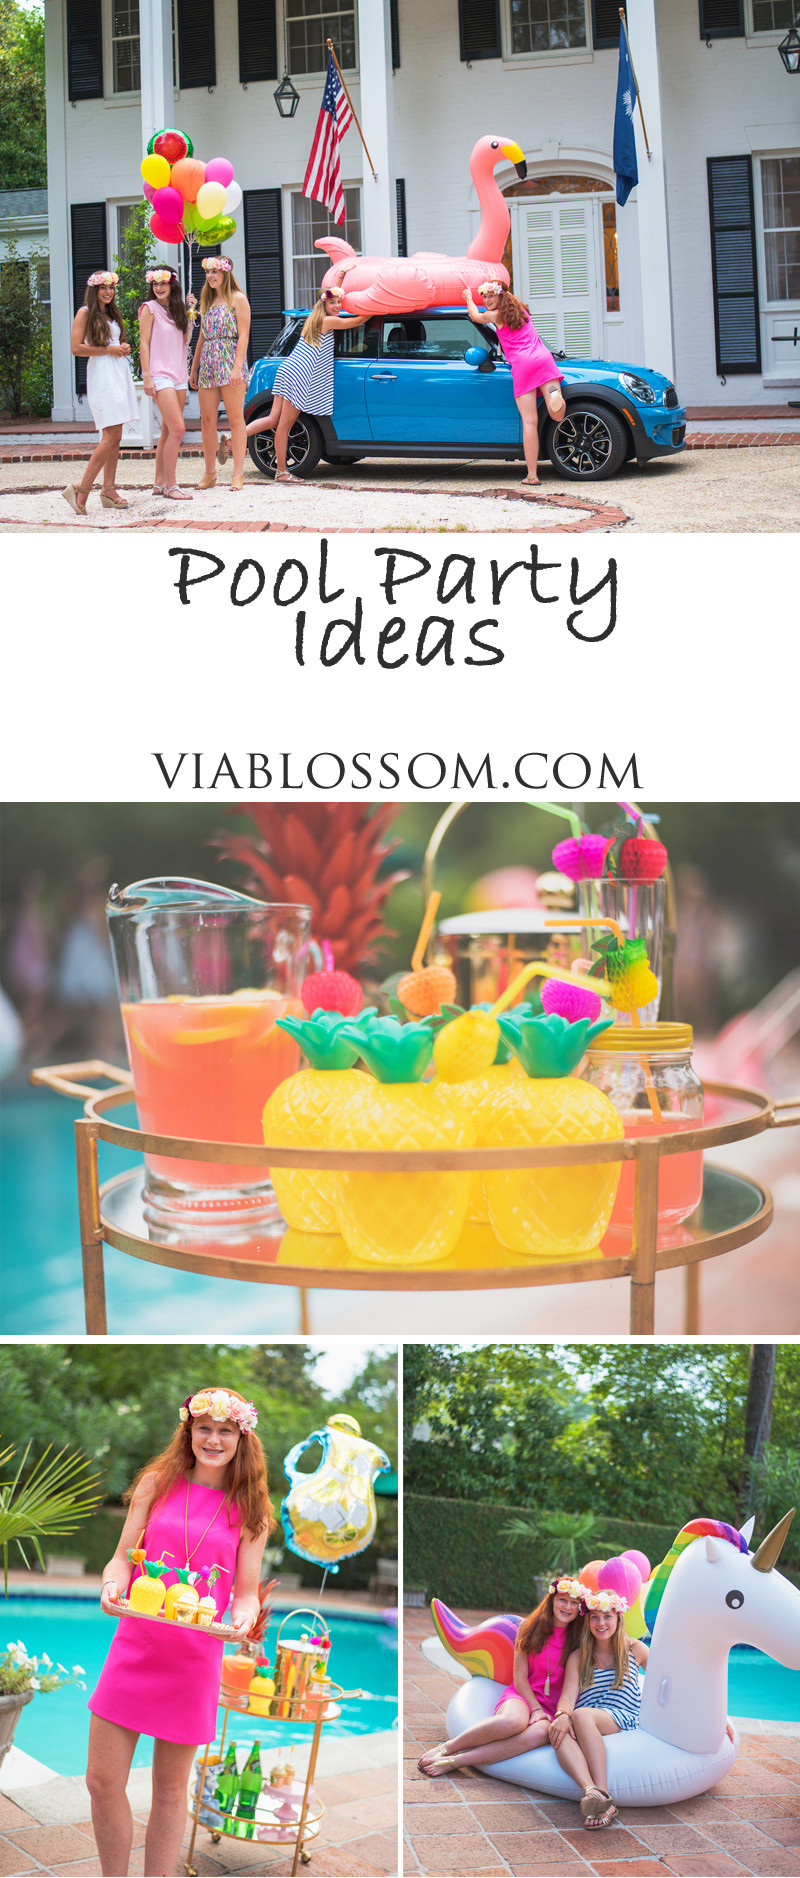 Rainbows And Unicorns Pool Party Ideas
 Pool Party Ideas Via Blossom